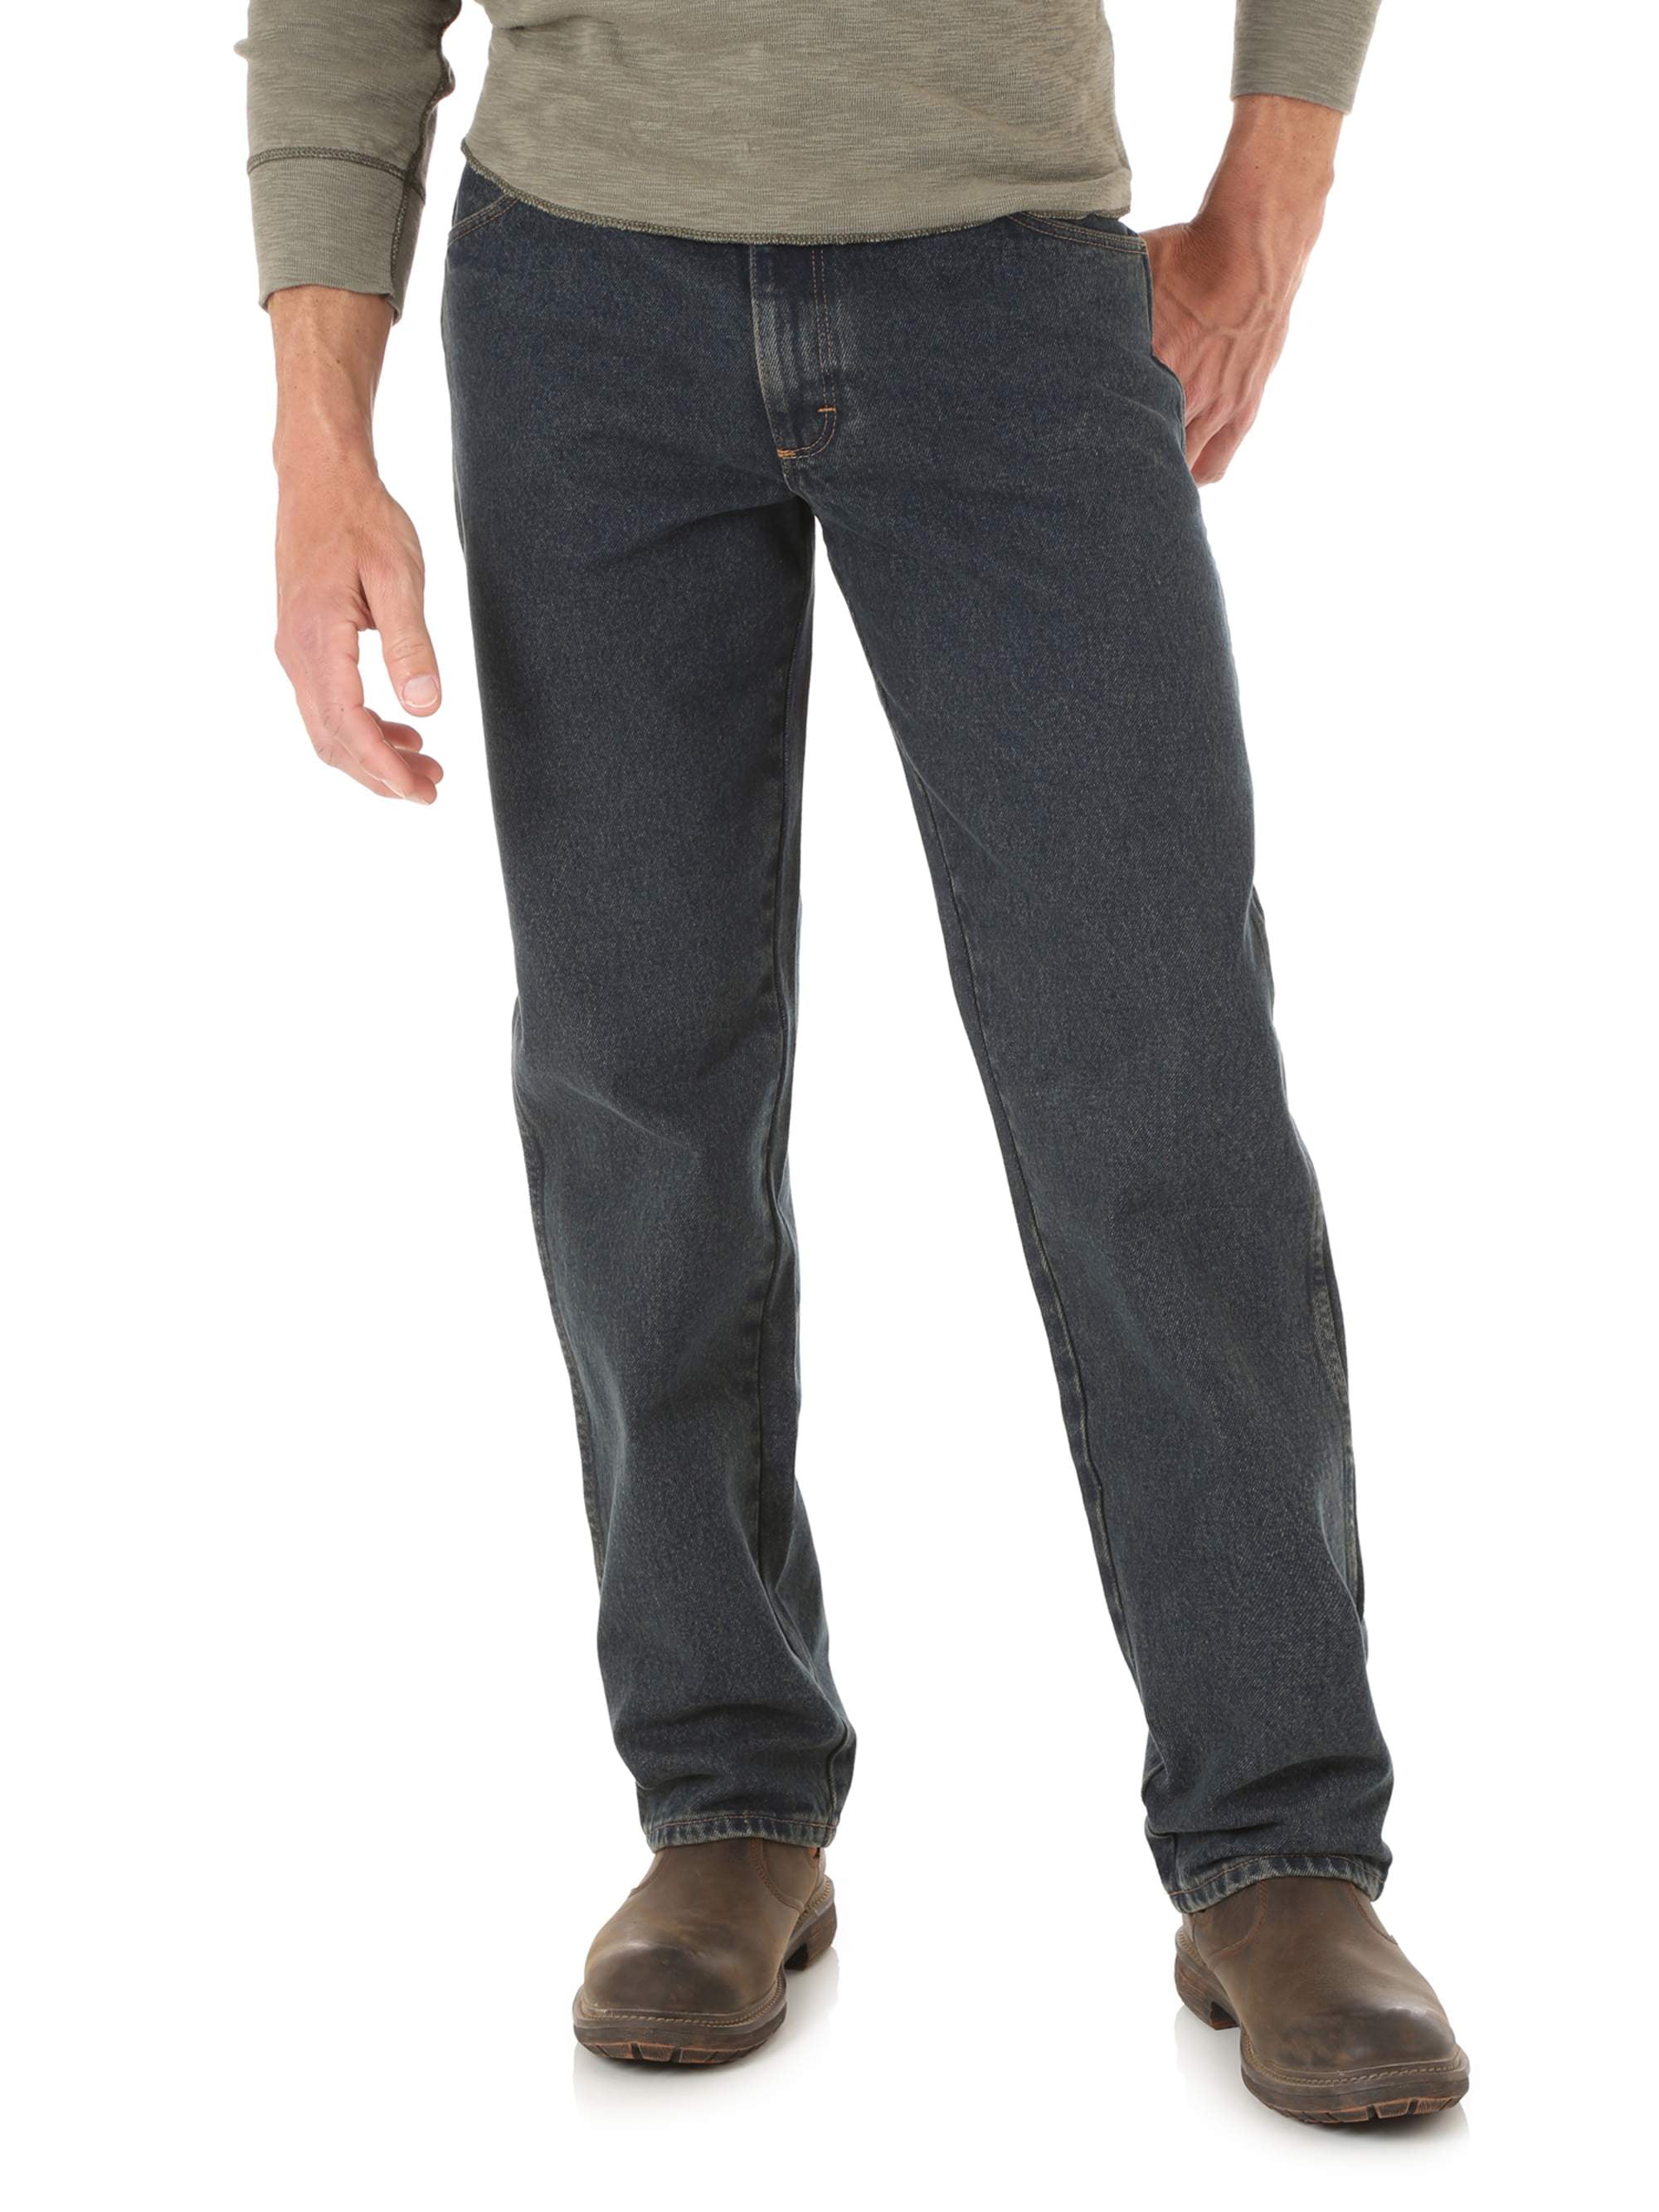 rustler men's relaxed fit jeans